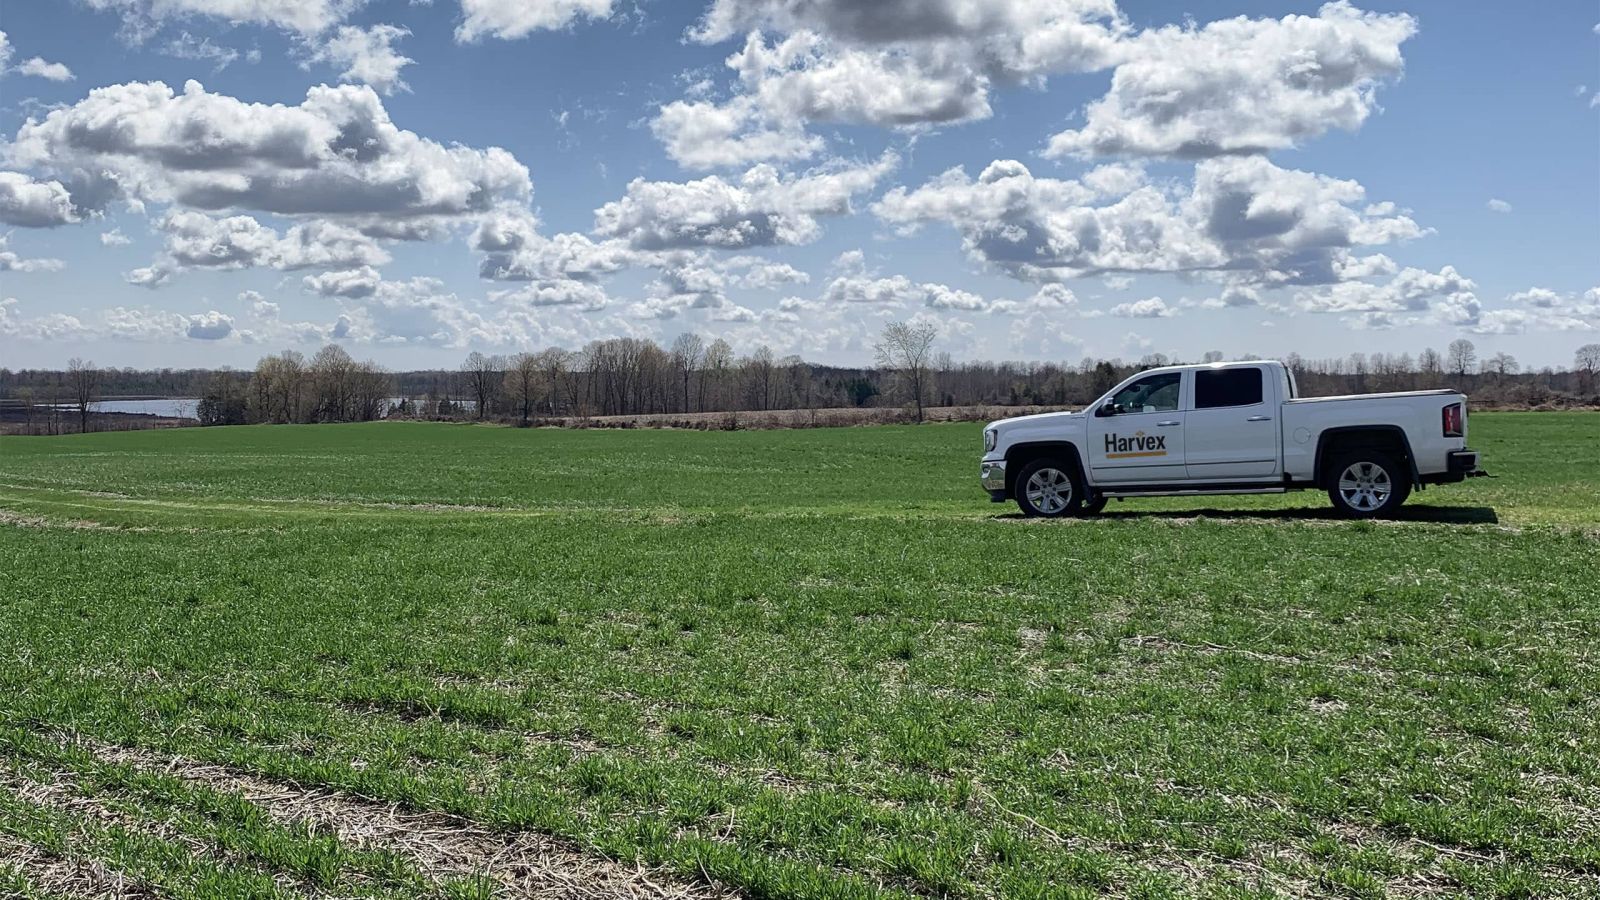 Harvex Truck on crop field with blue sky